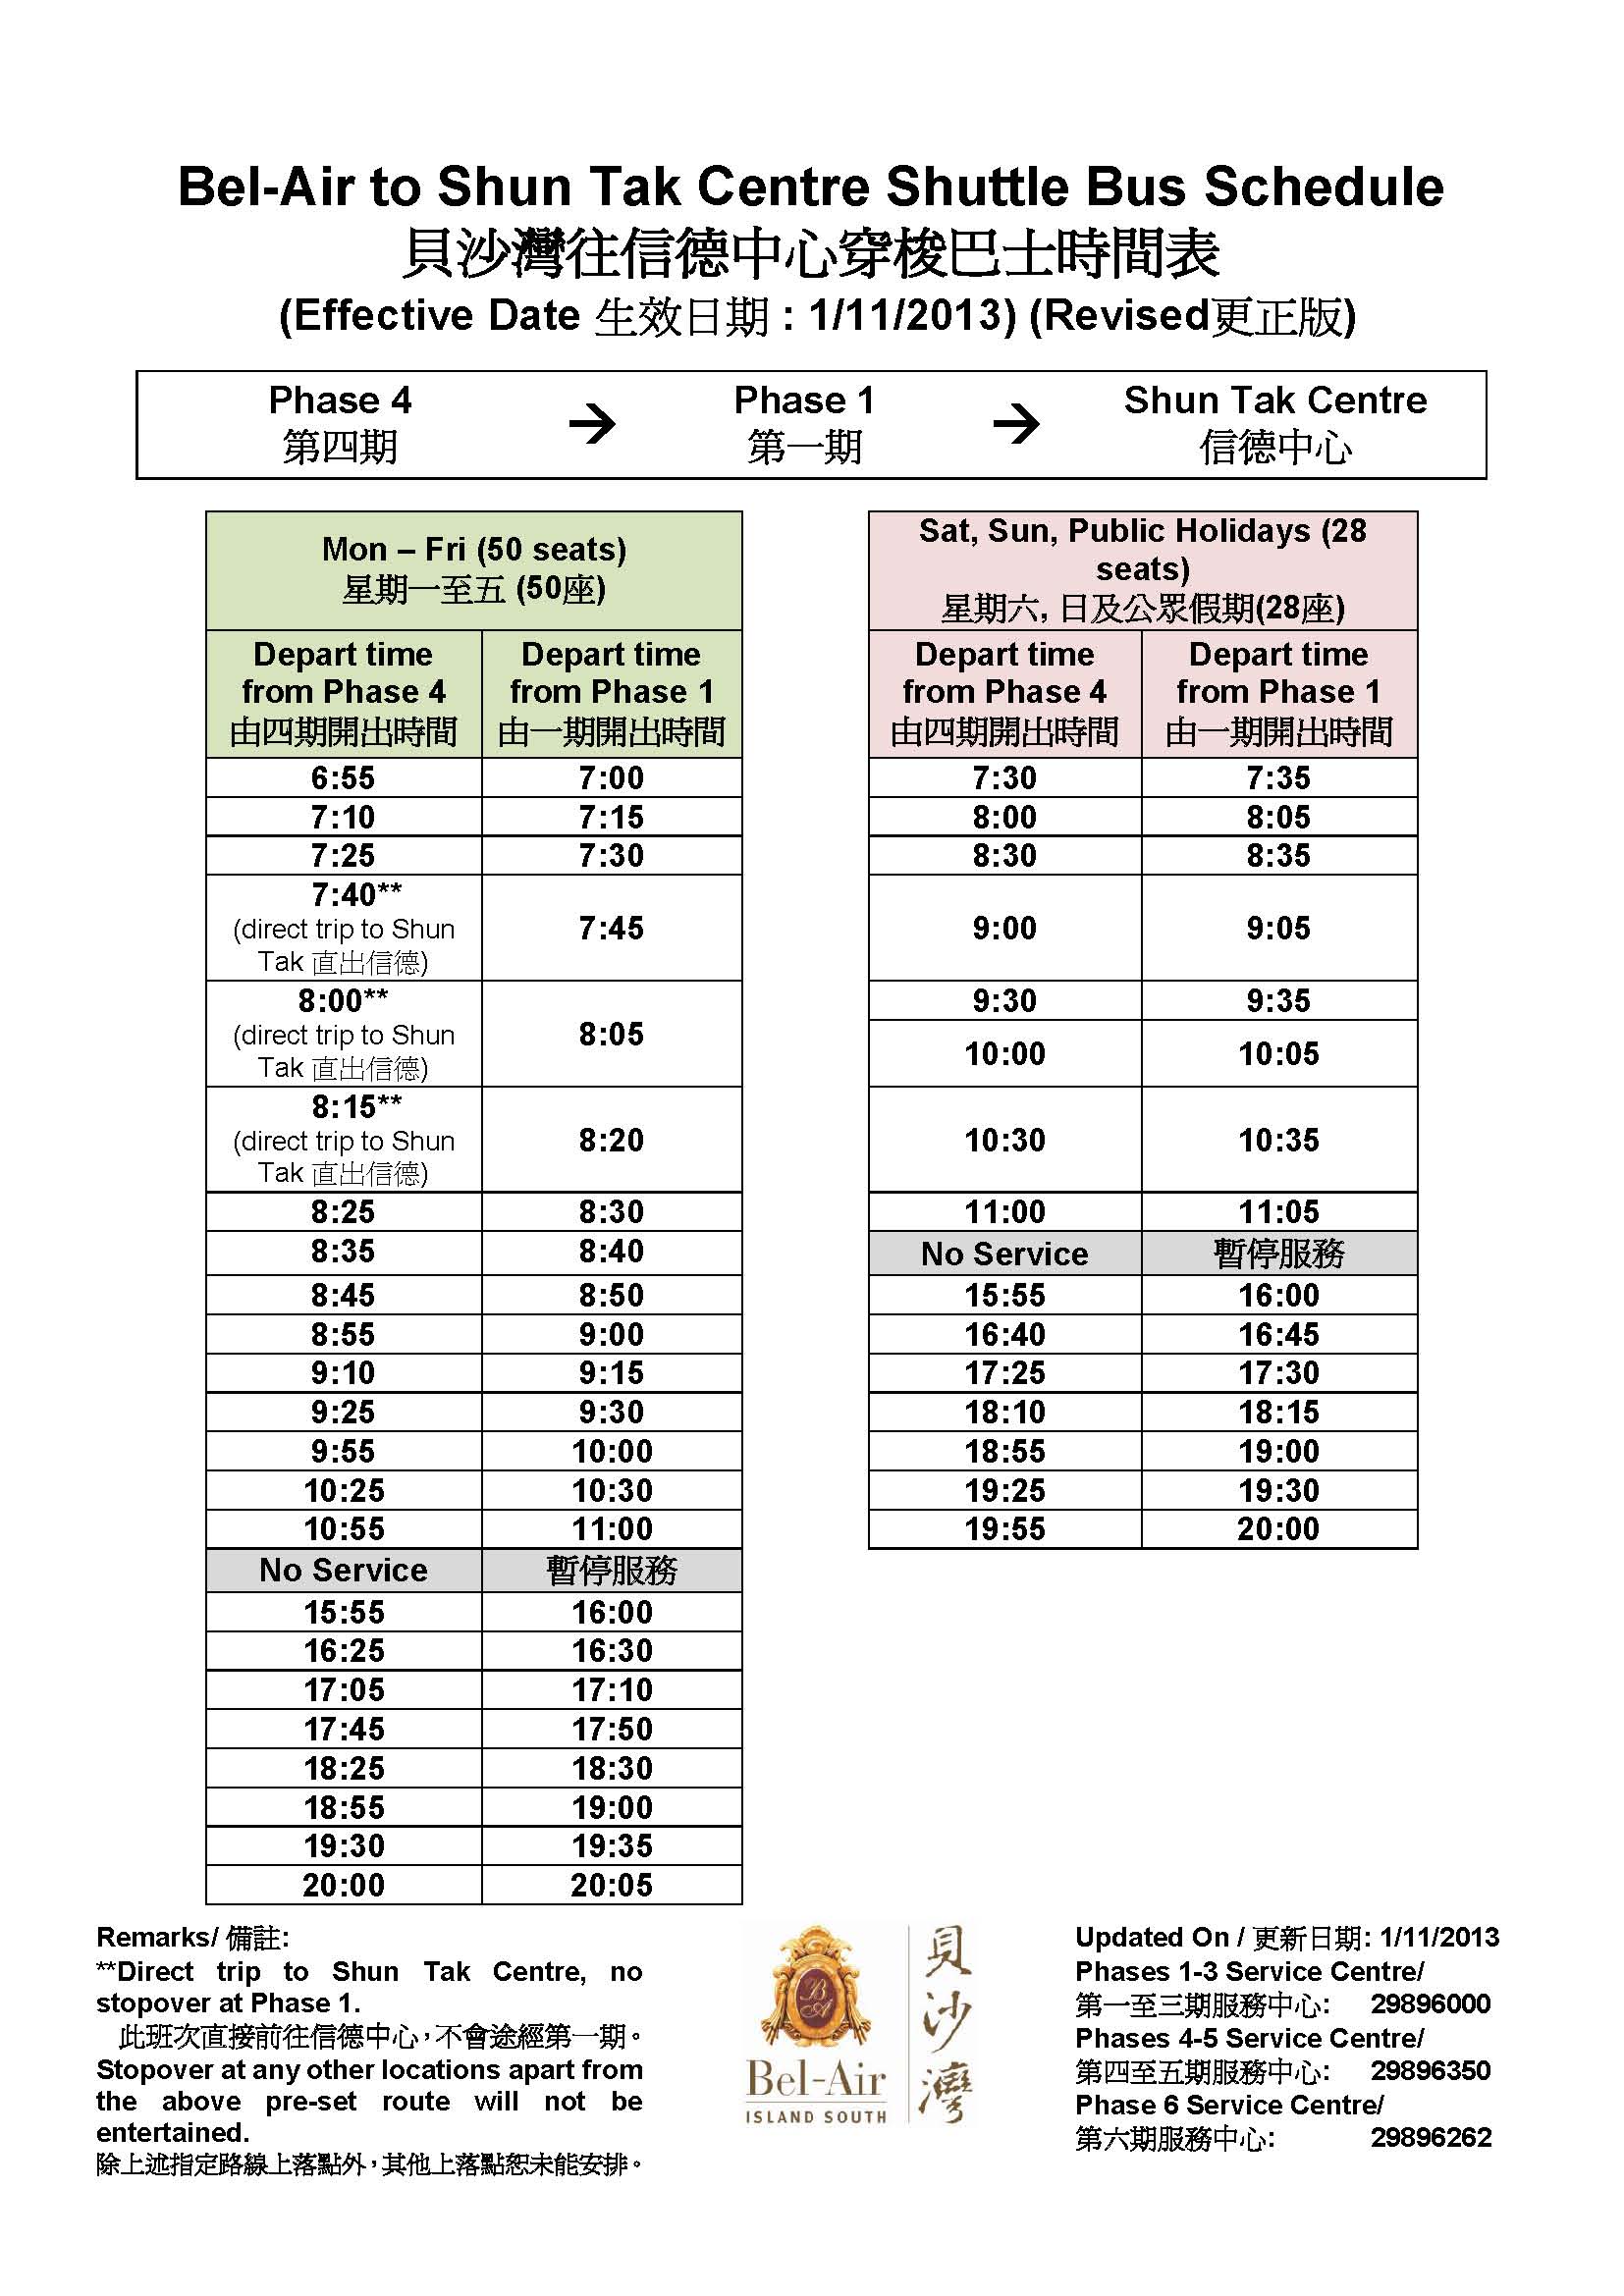 chumash casino shuttle bus schedule